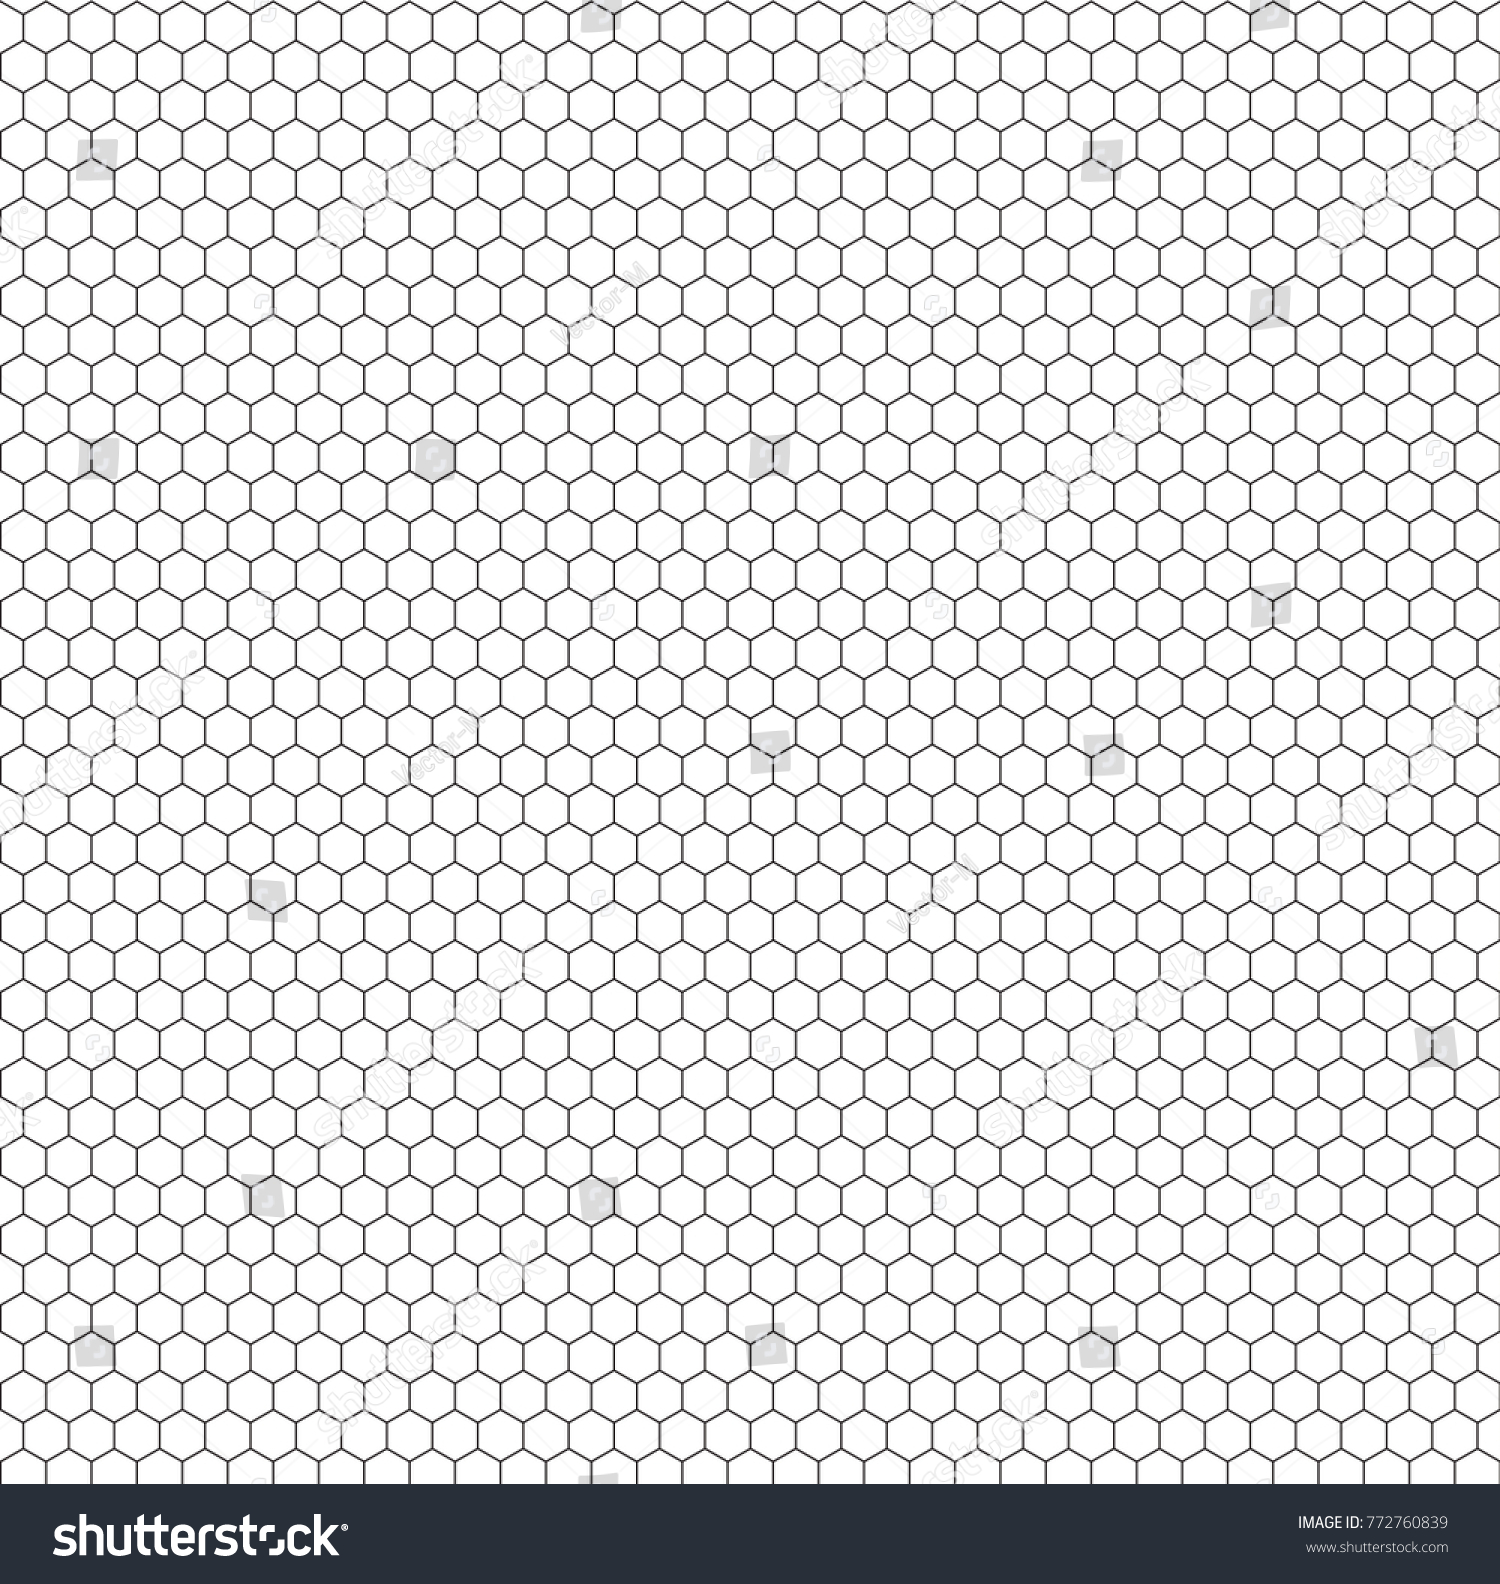 3 879 hexagonal graph paper images stock photos vectors shutterstock